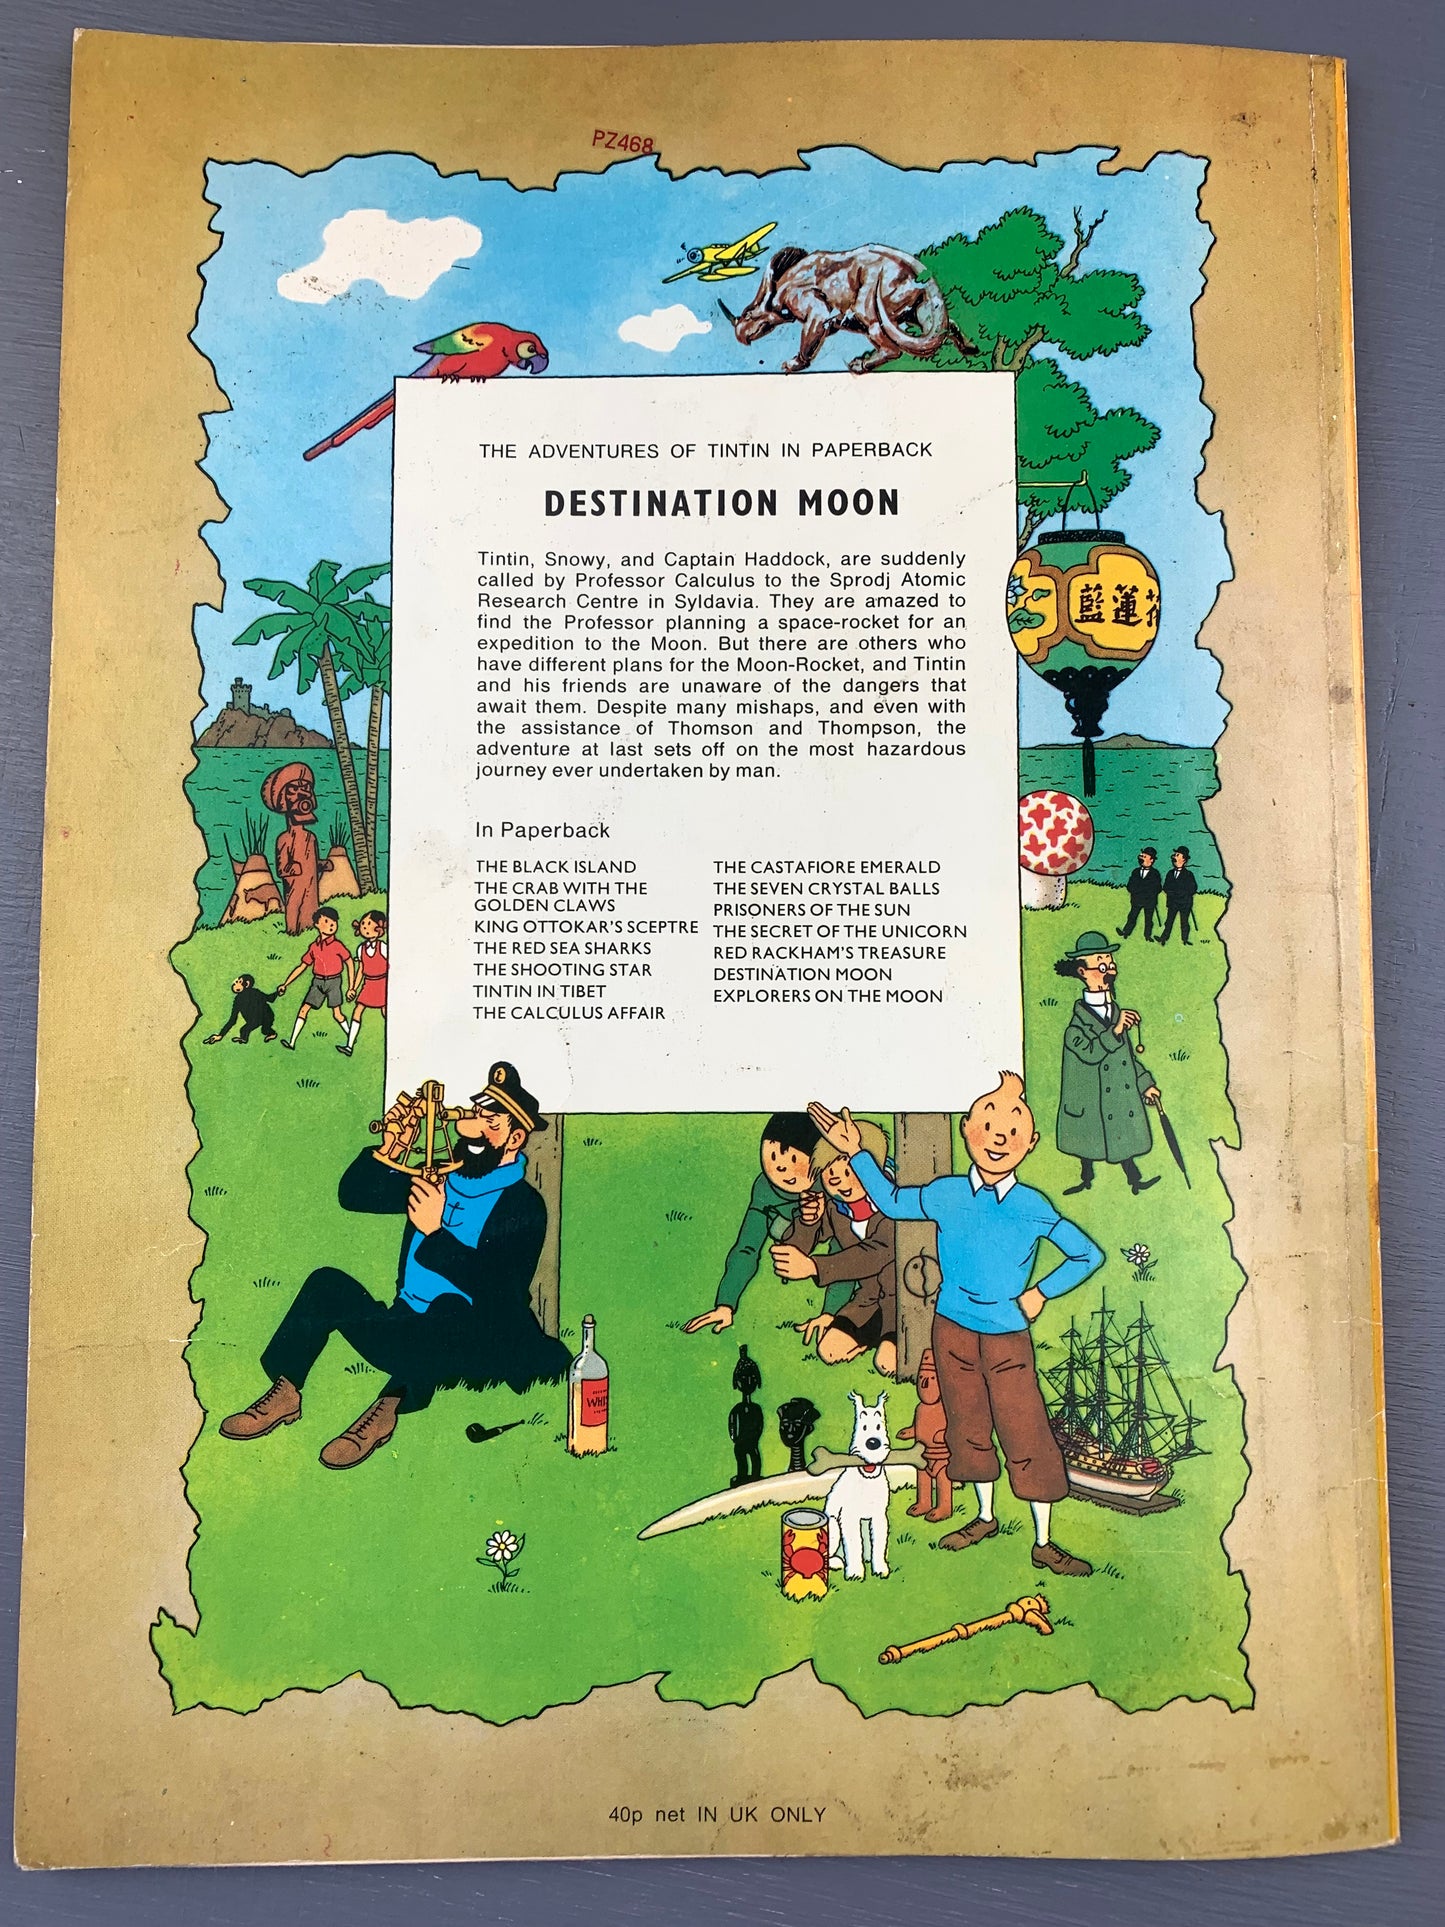 Destination Moon - Tintin Methuen 1st UK Paperback Edition Book 1970s